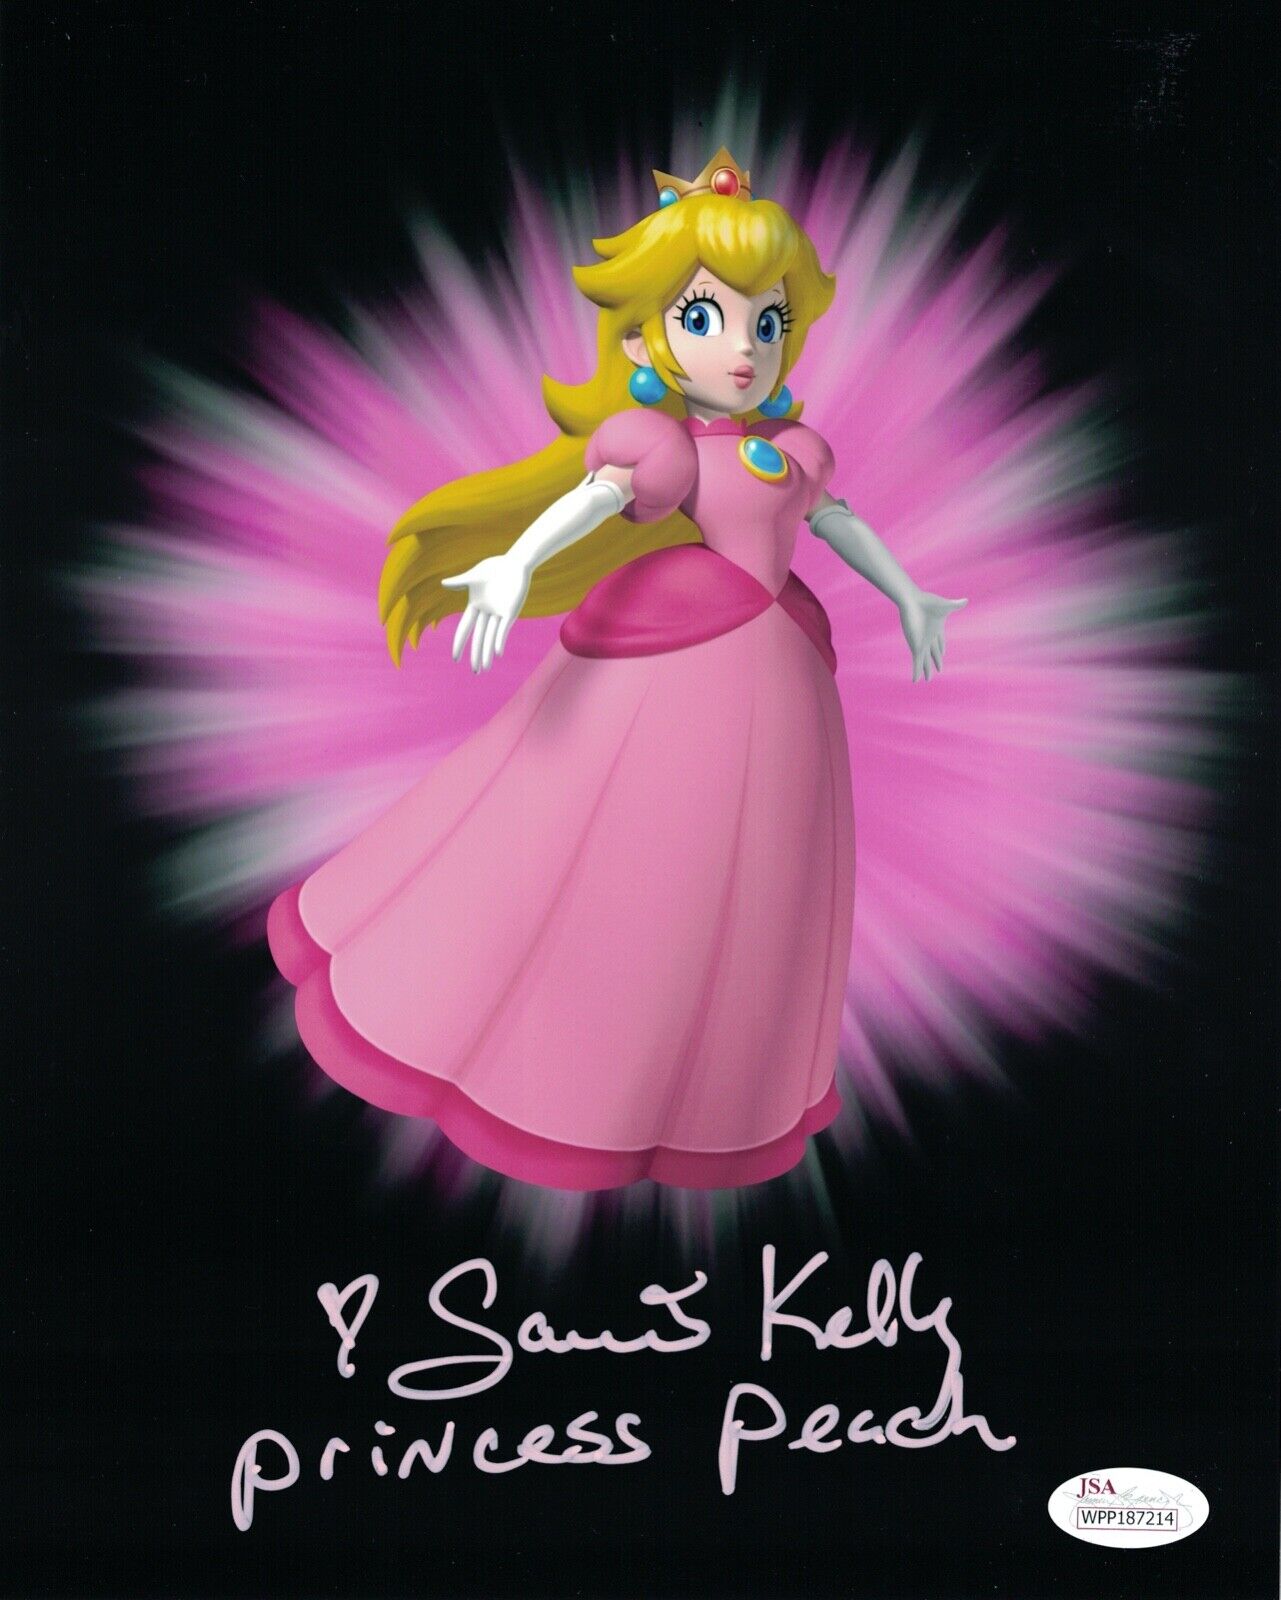 SAMANTHA KELLY Signed PRINCESS PEACH 8x10 Photo Poster painting Nintendo Super Mario JSA COA